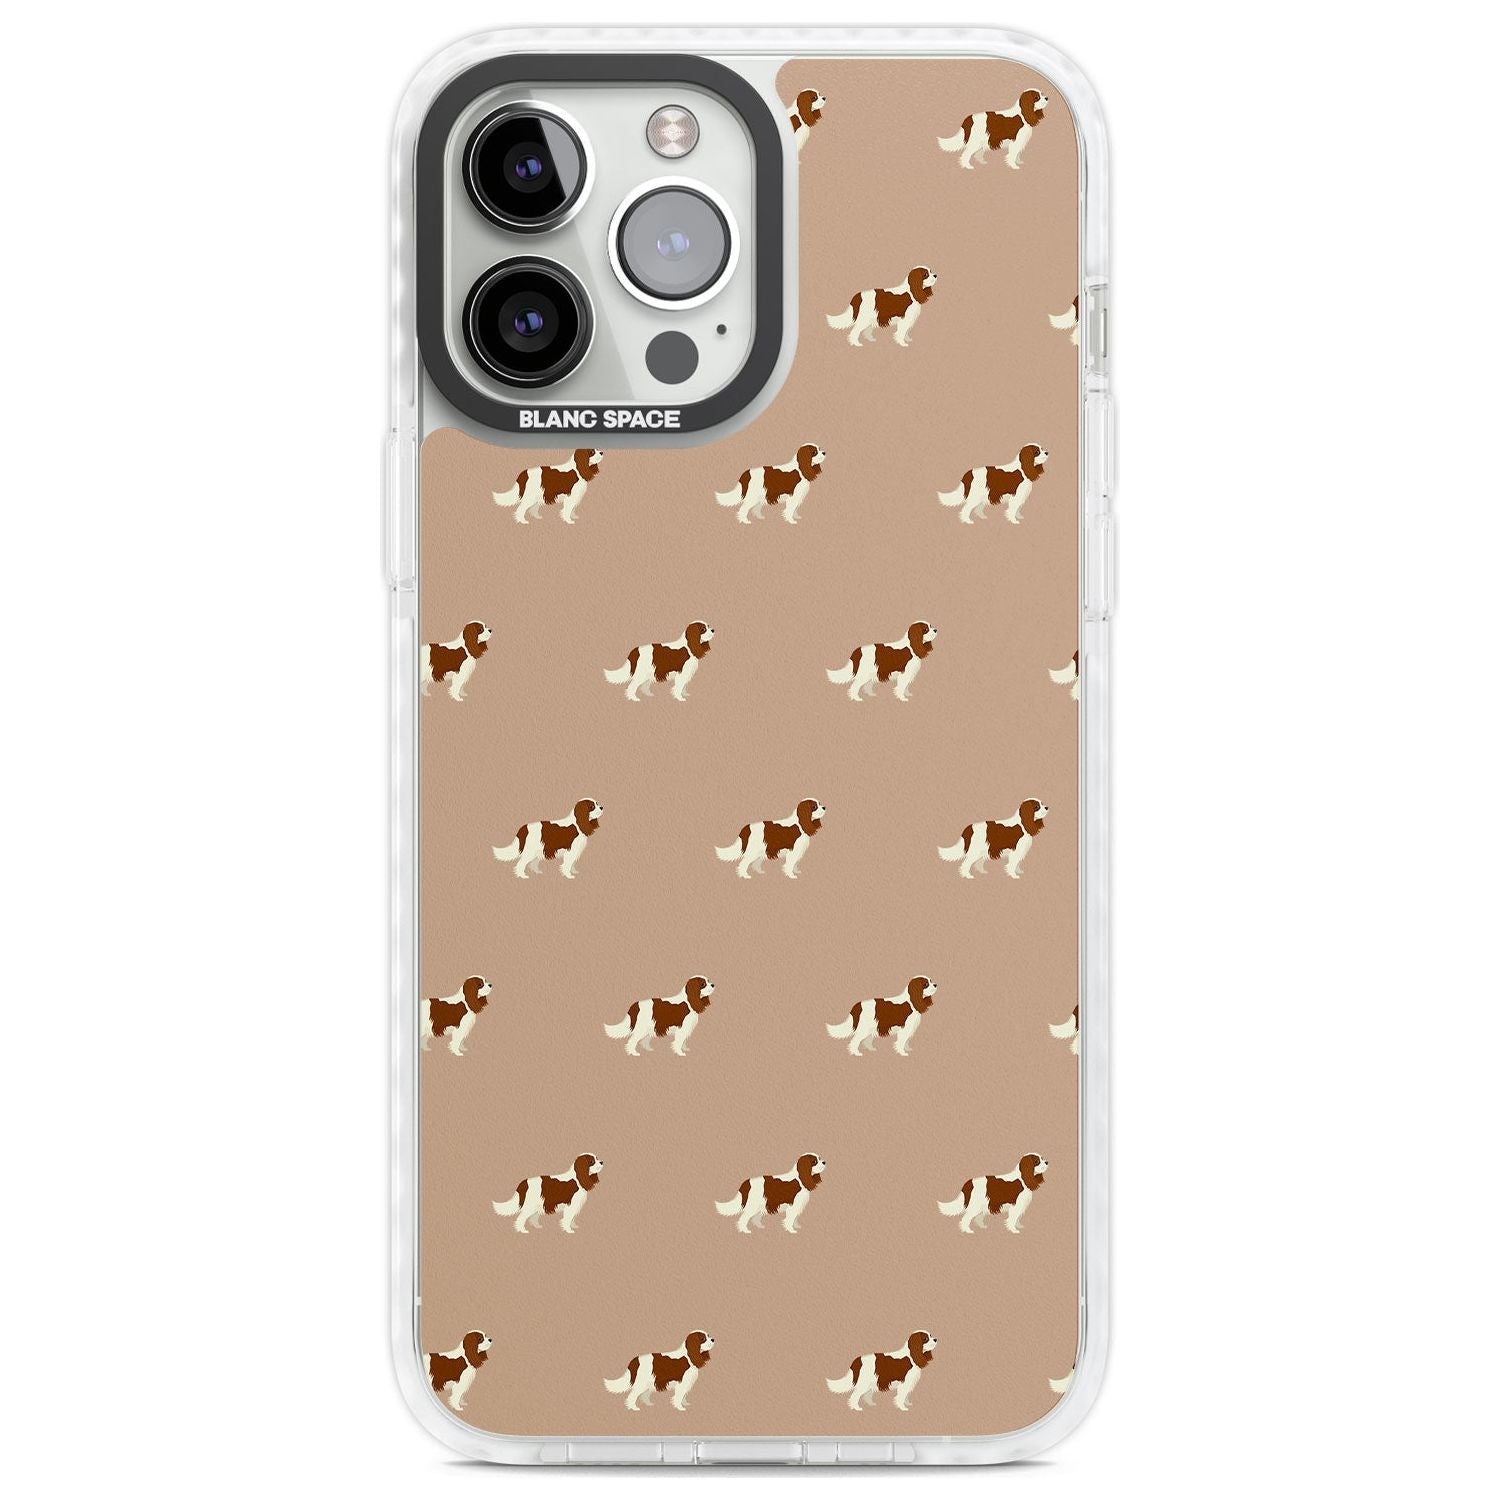 Cavalier King Charles Spaniel Pattern Phone Case iPhone 13 Pro Max / Impact Case,iPhone 14 Pro Max / Impact Case Blanc Space